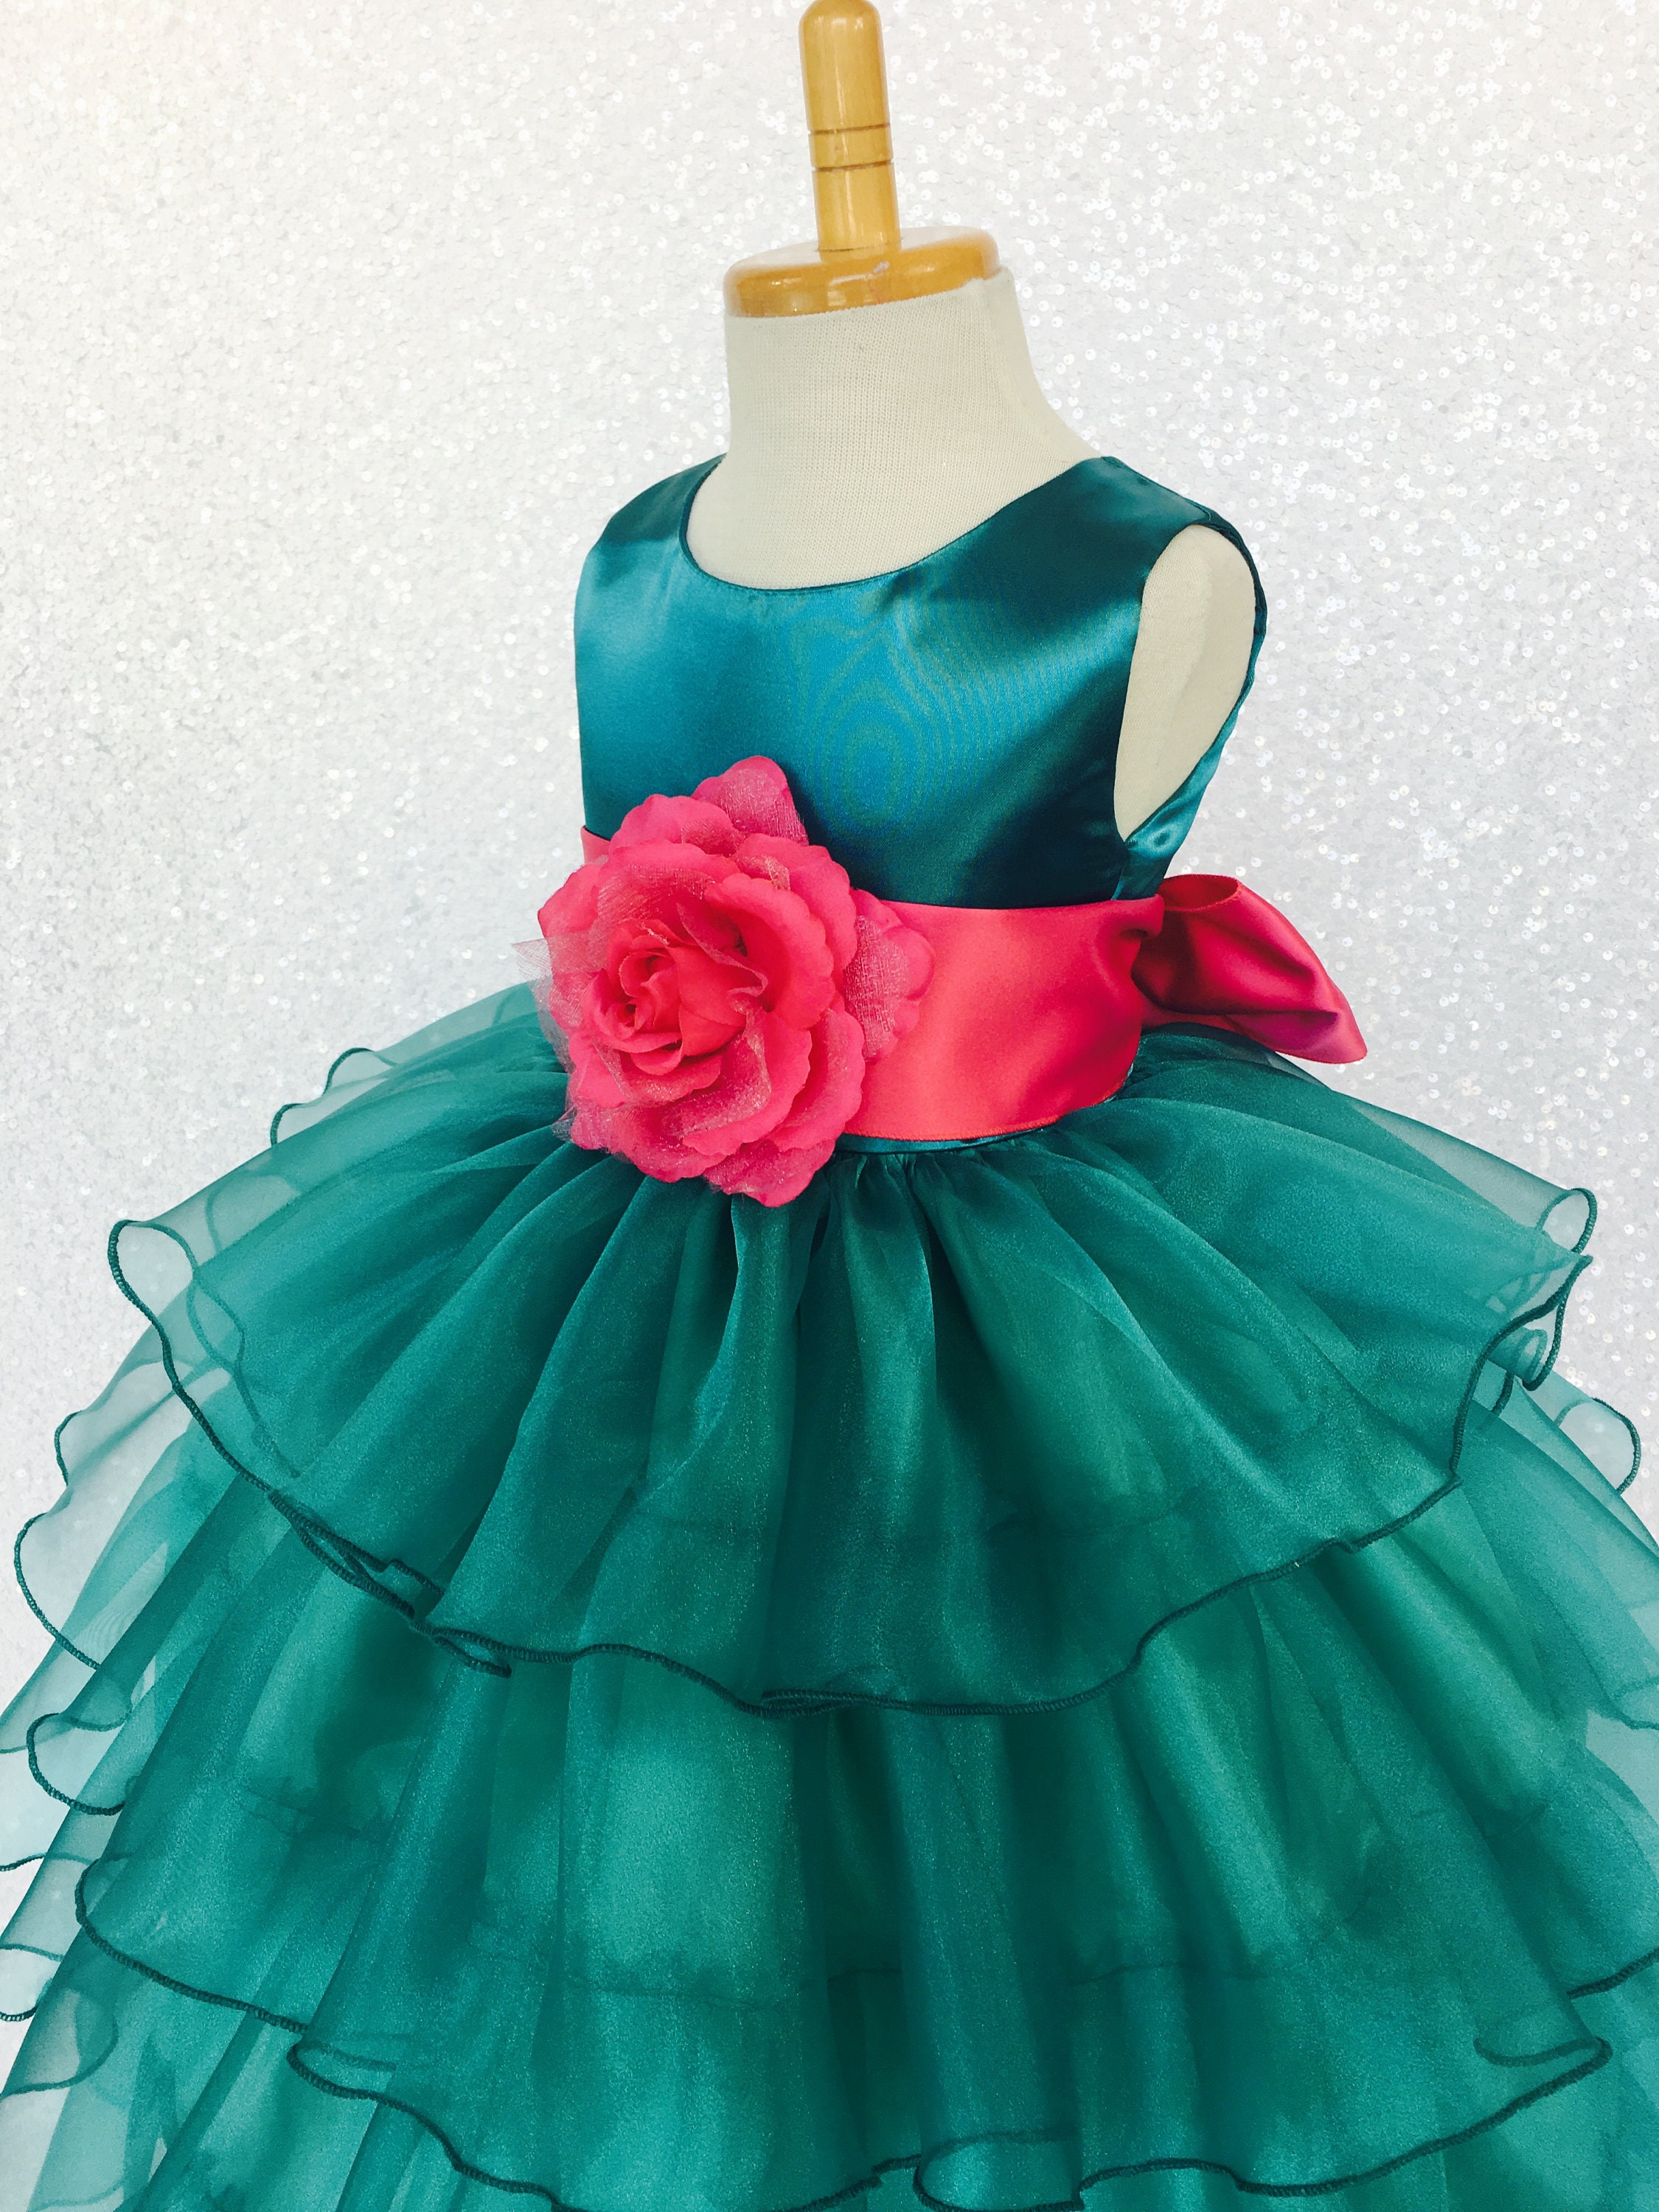 Teal Organza Ruffle Gown Fuchsia Satin Sash Flower Girl | Etsy